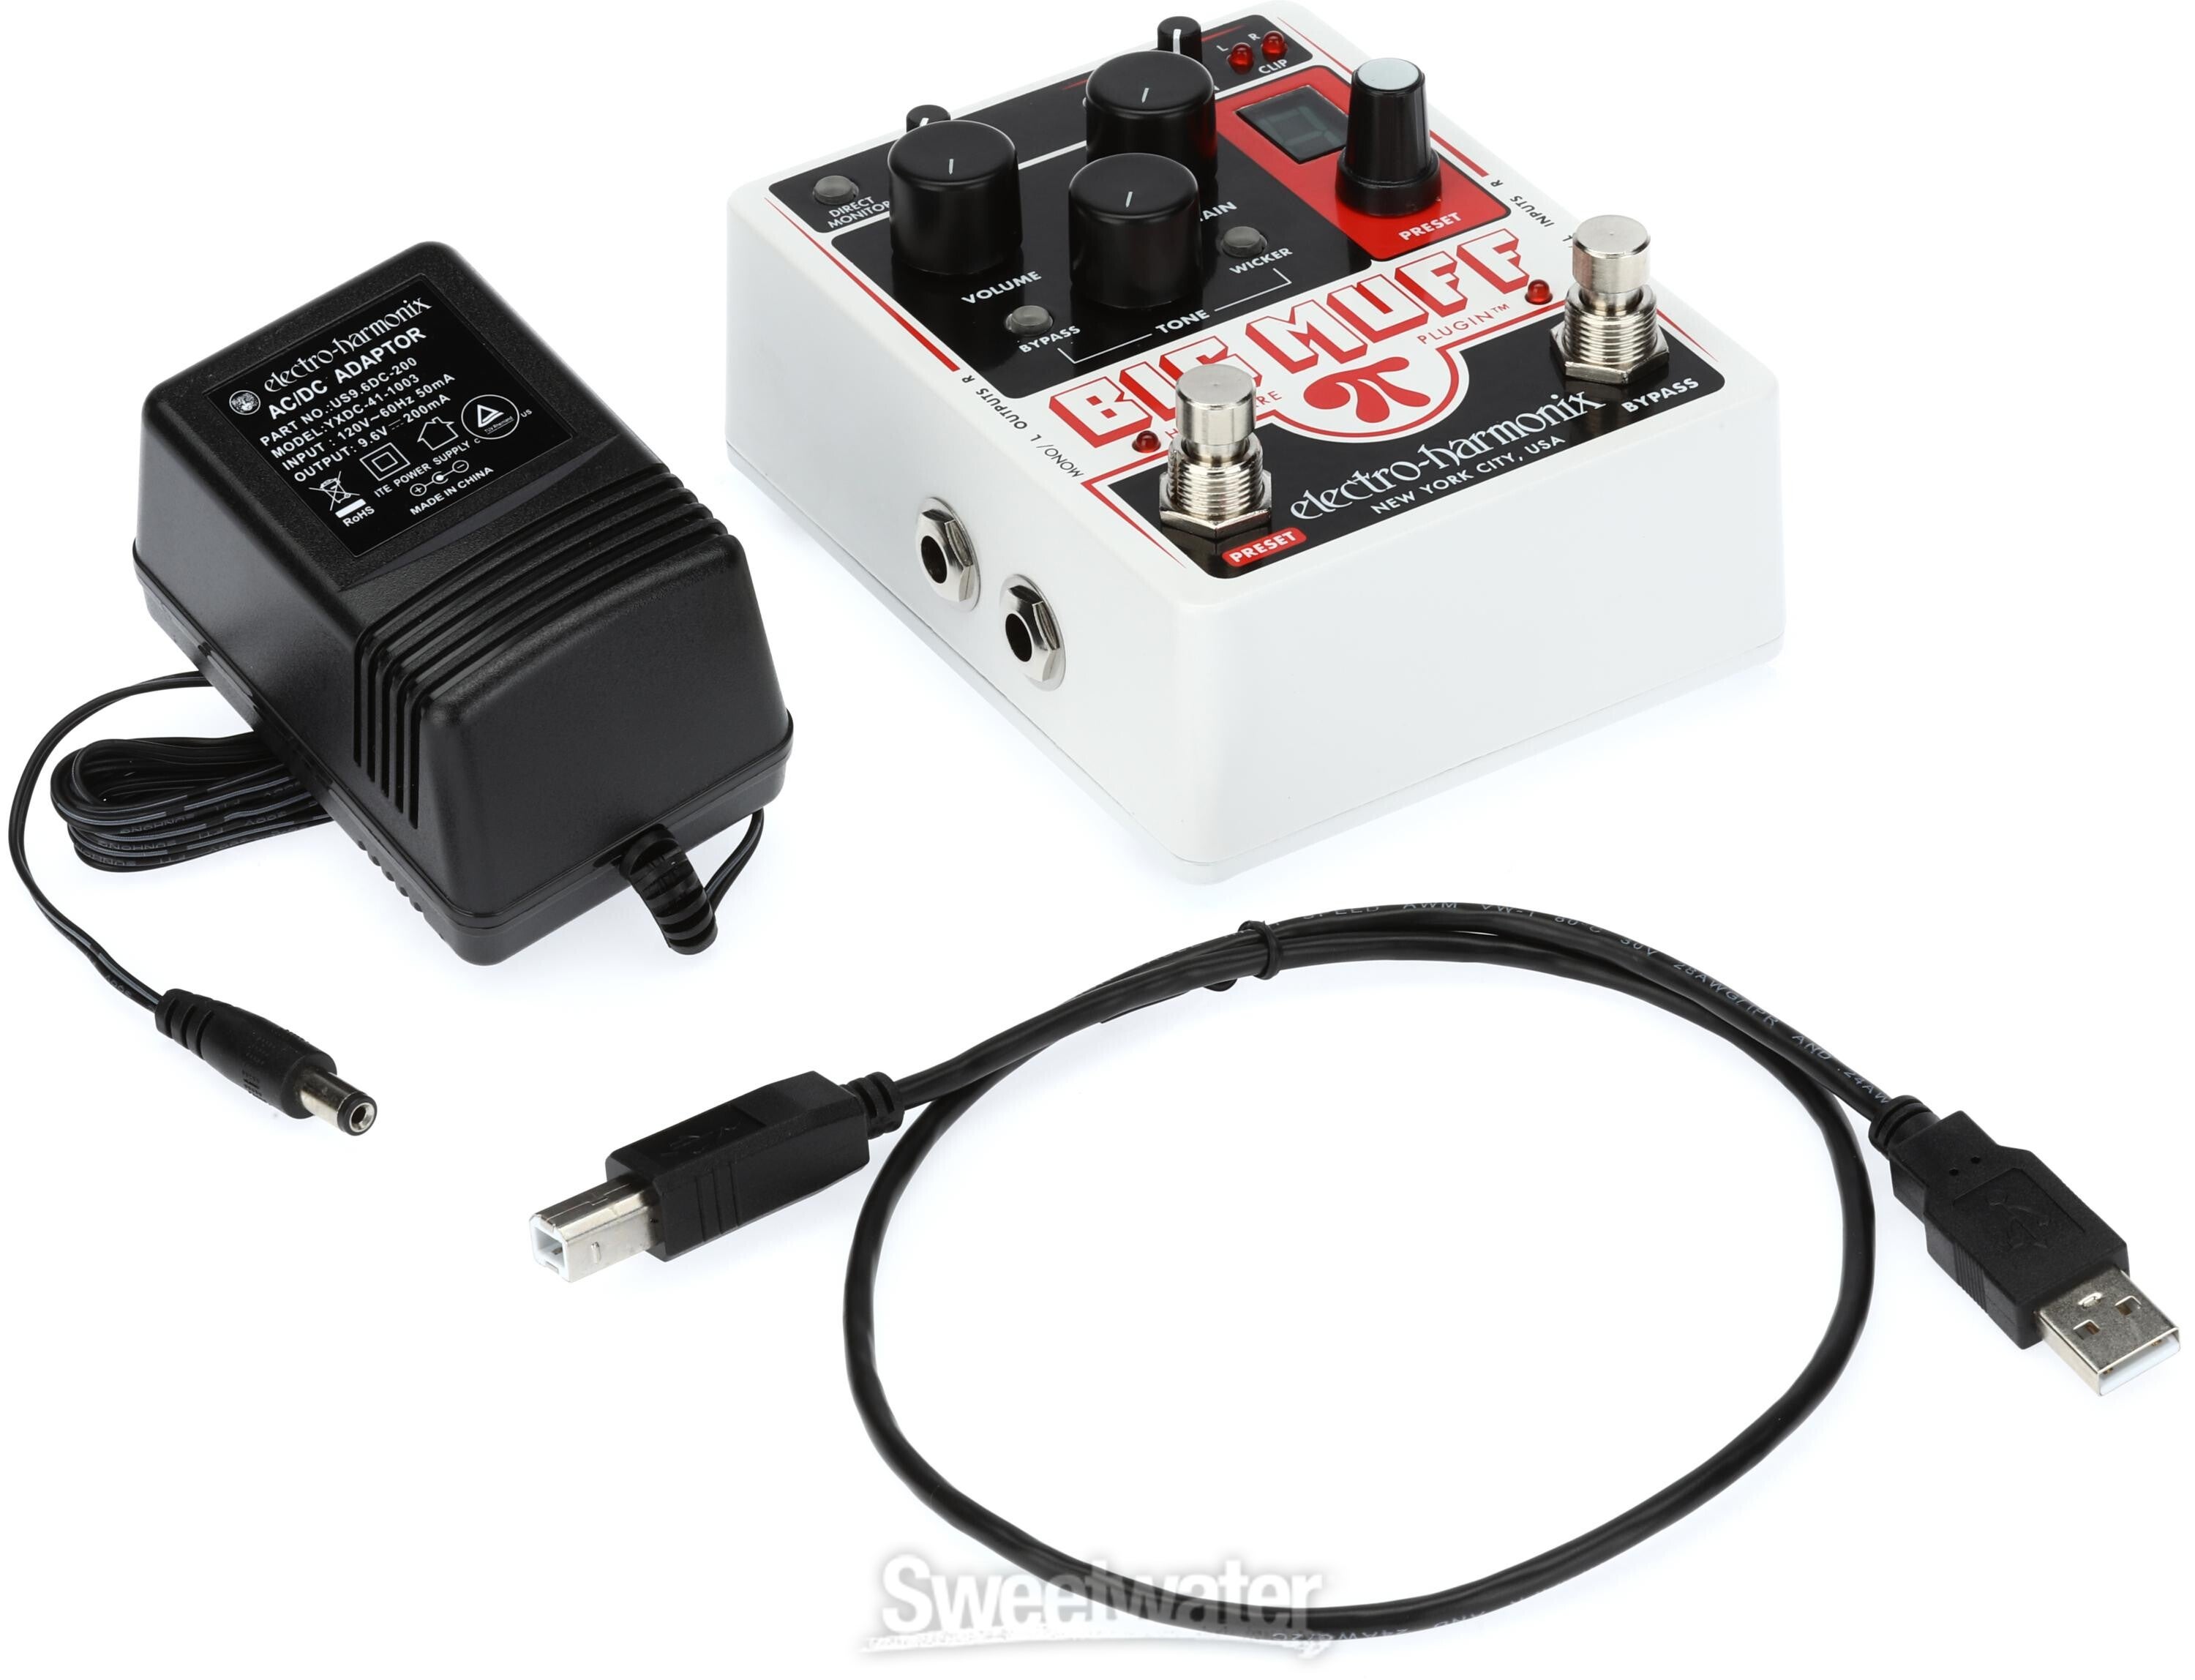 Electro-Harmonix Big Muff Pi Hardware Plug-in Effects Pedal and 2 